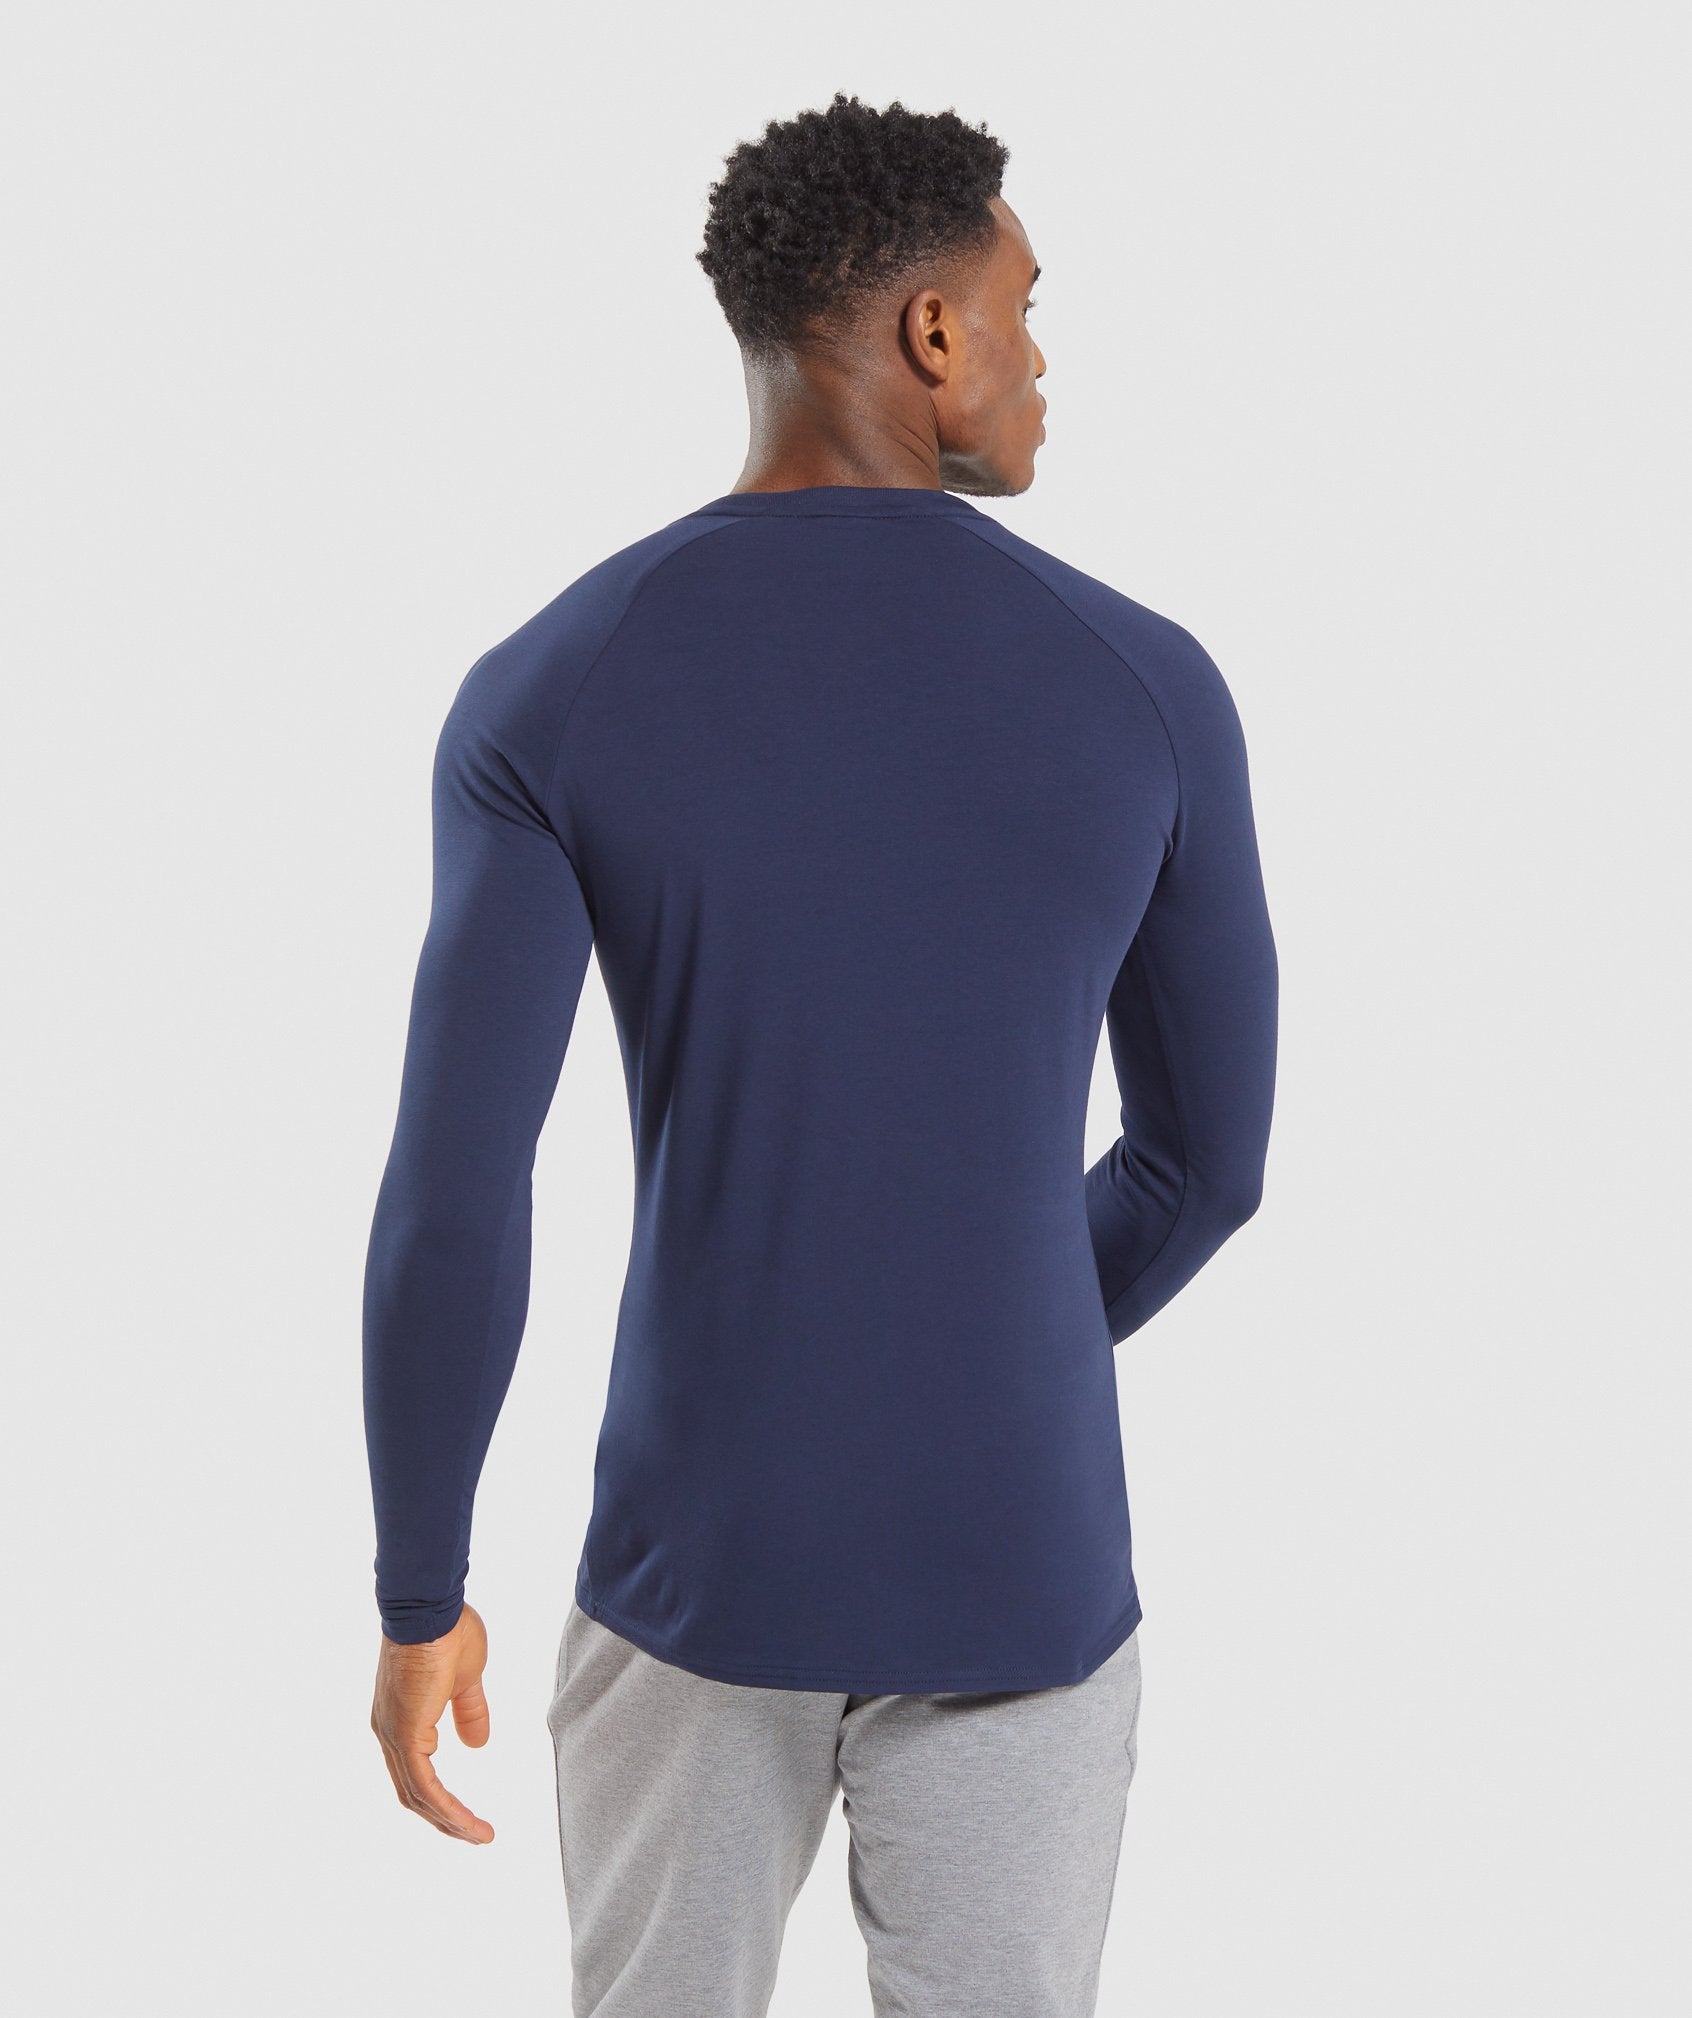 Apollo Long Sleeve T-Shirt in Dark Blue - view 2